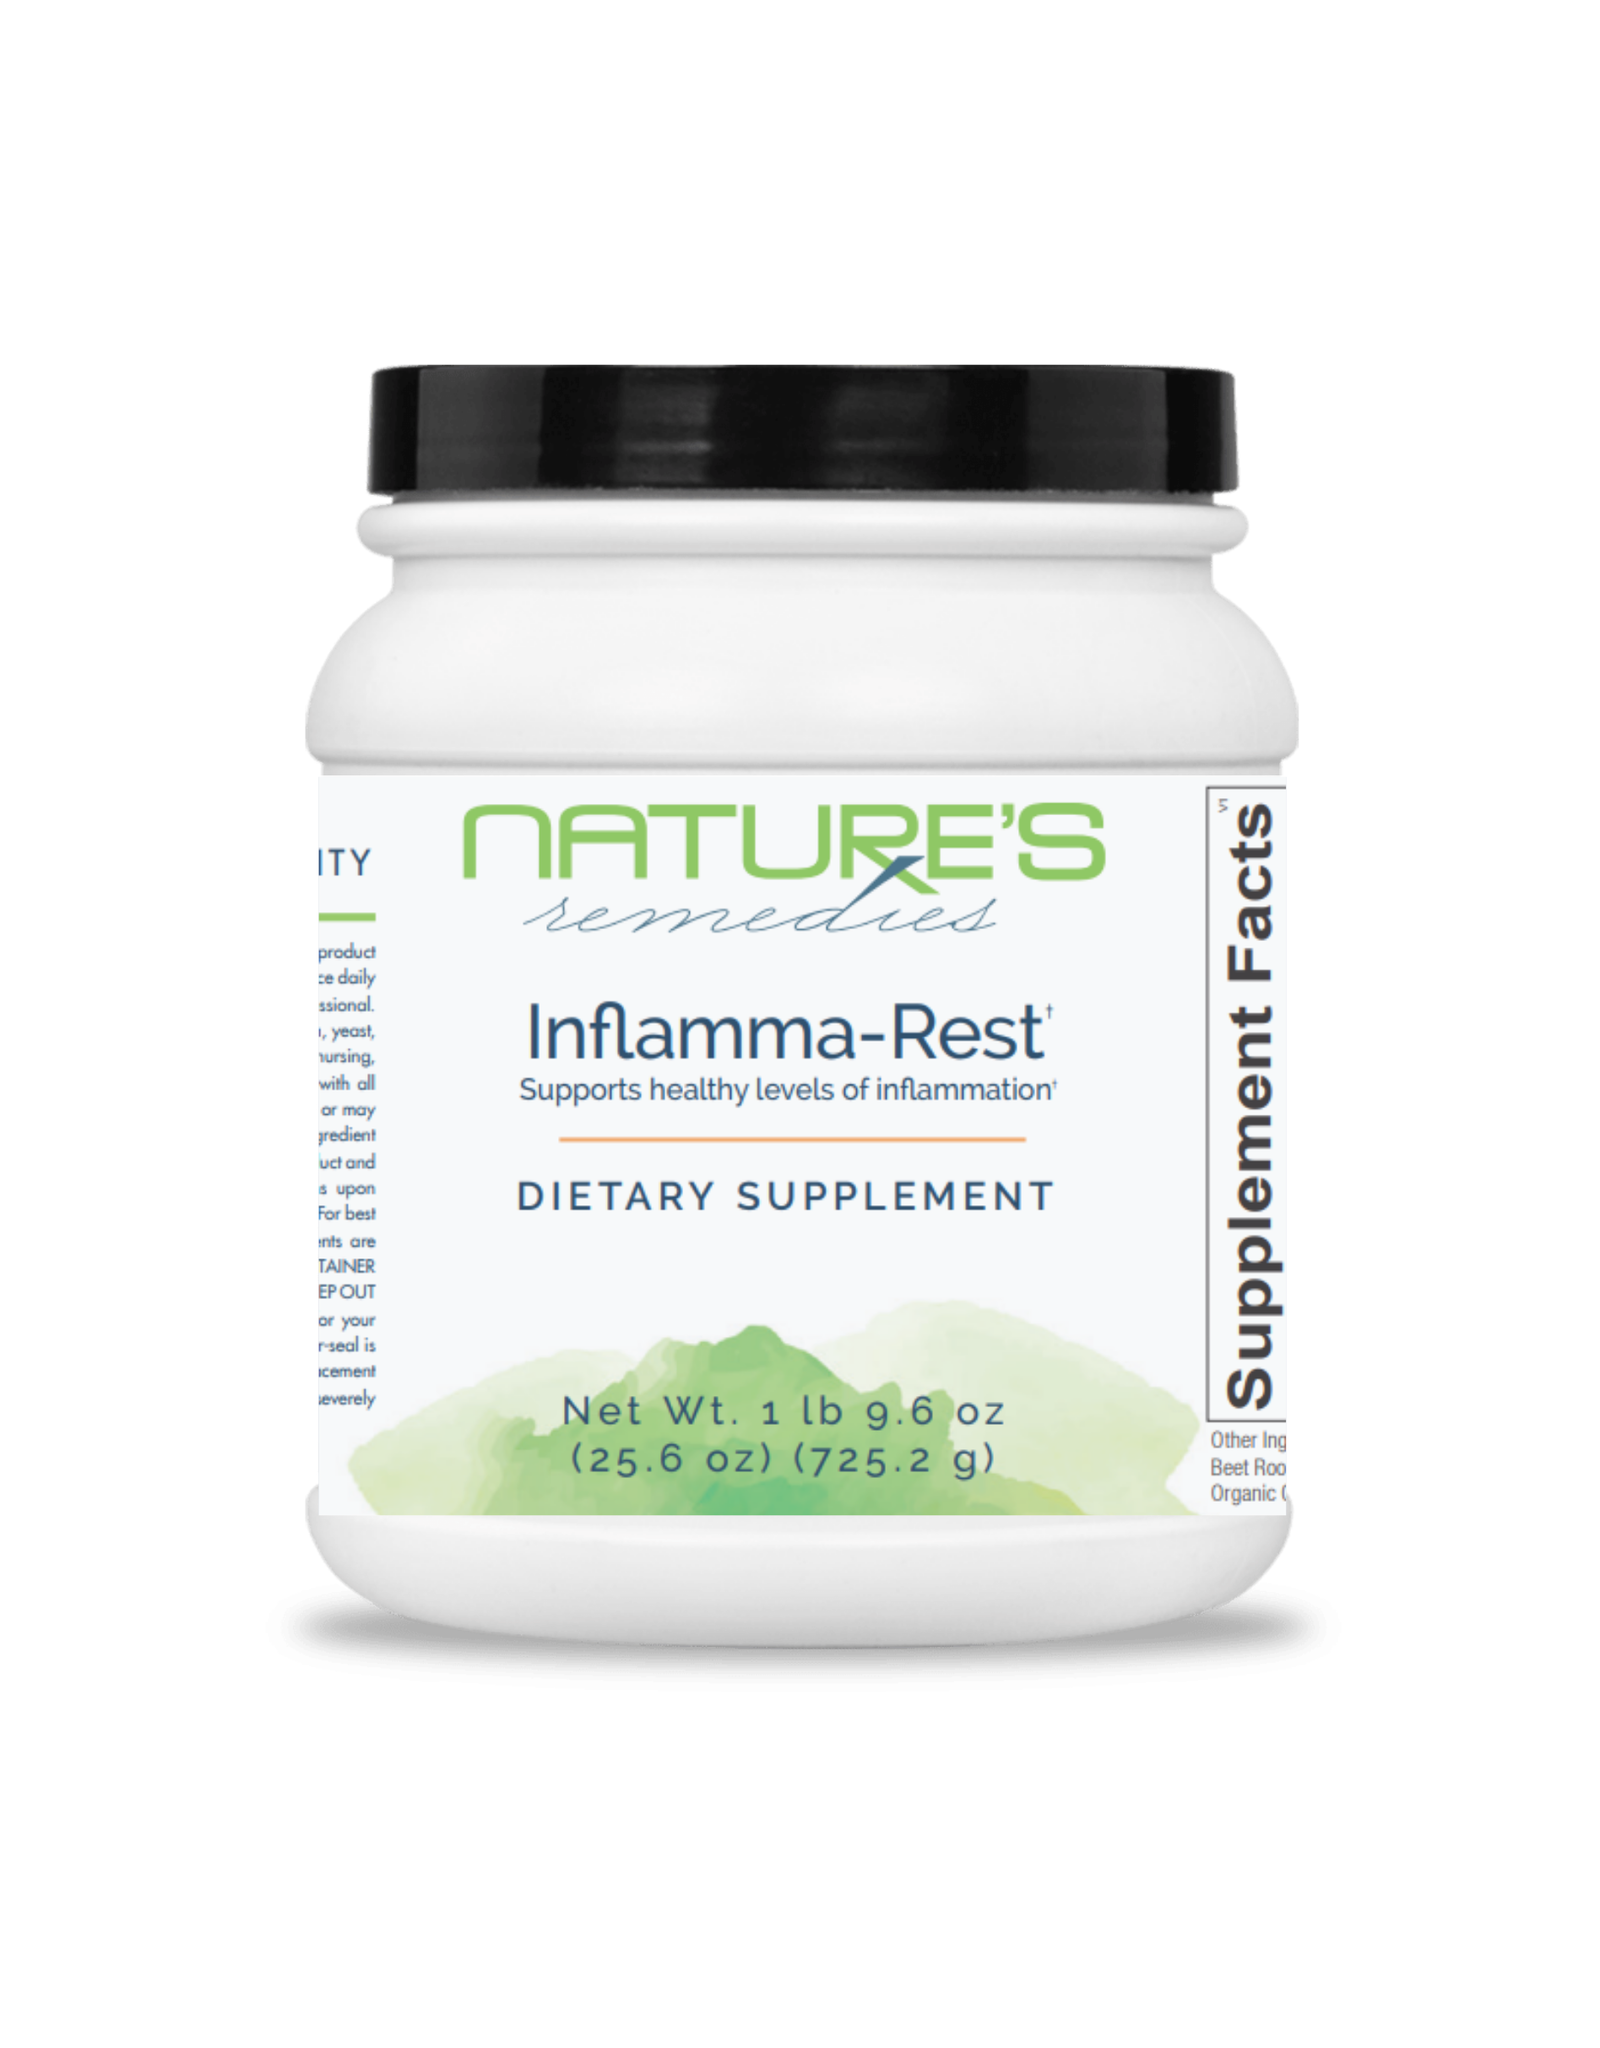 Inflamma-Rest